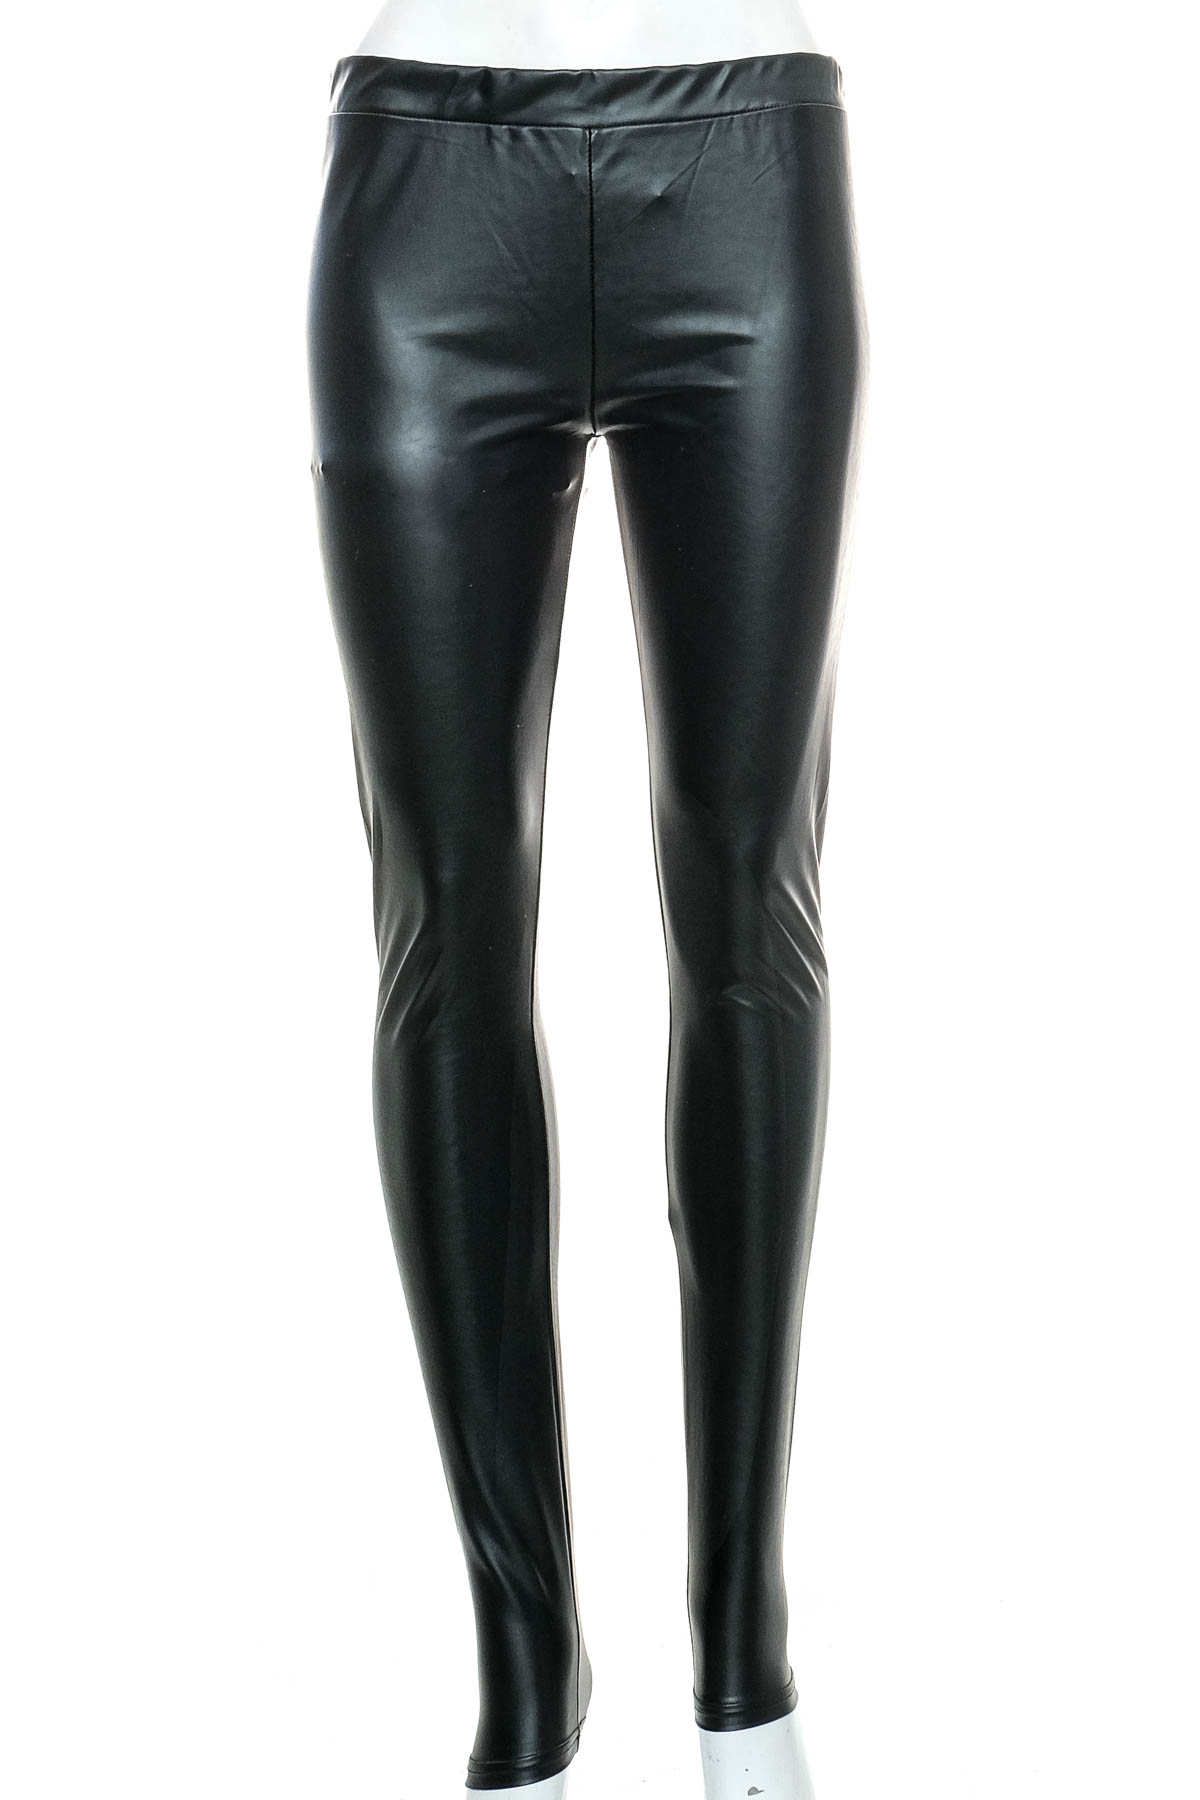 Leather leggings - Nielsson - 0